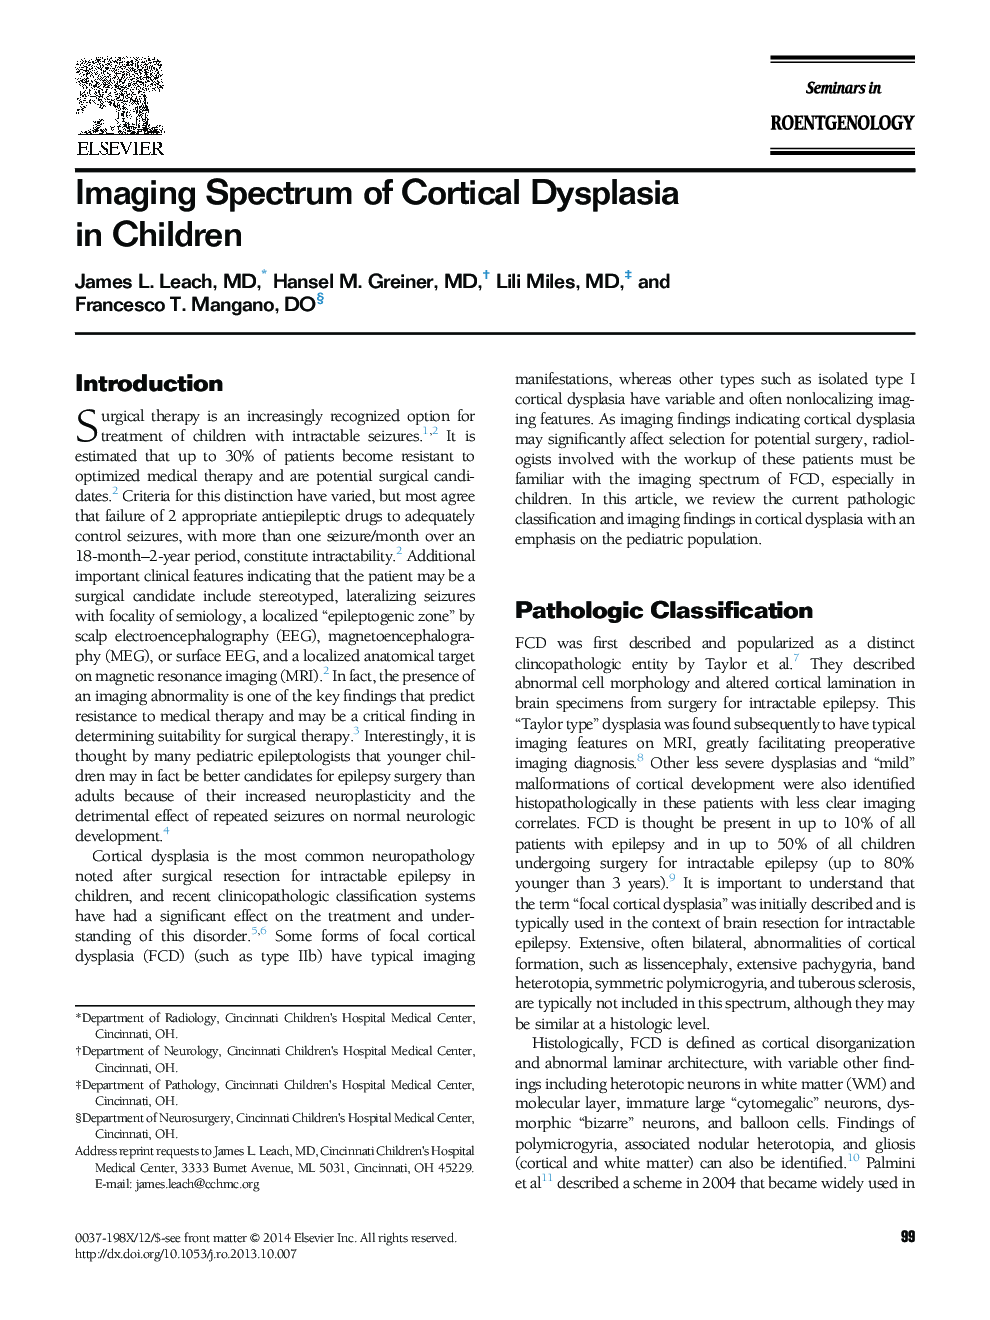 Imaging Spectrum of Cortical Dysplasia in Children